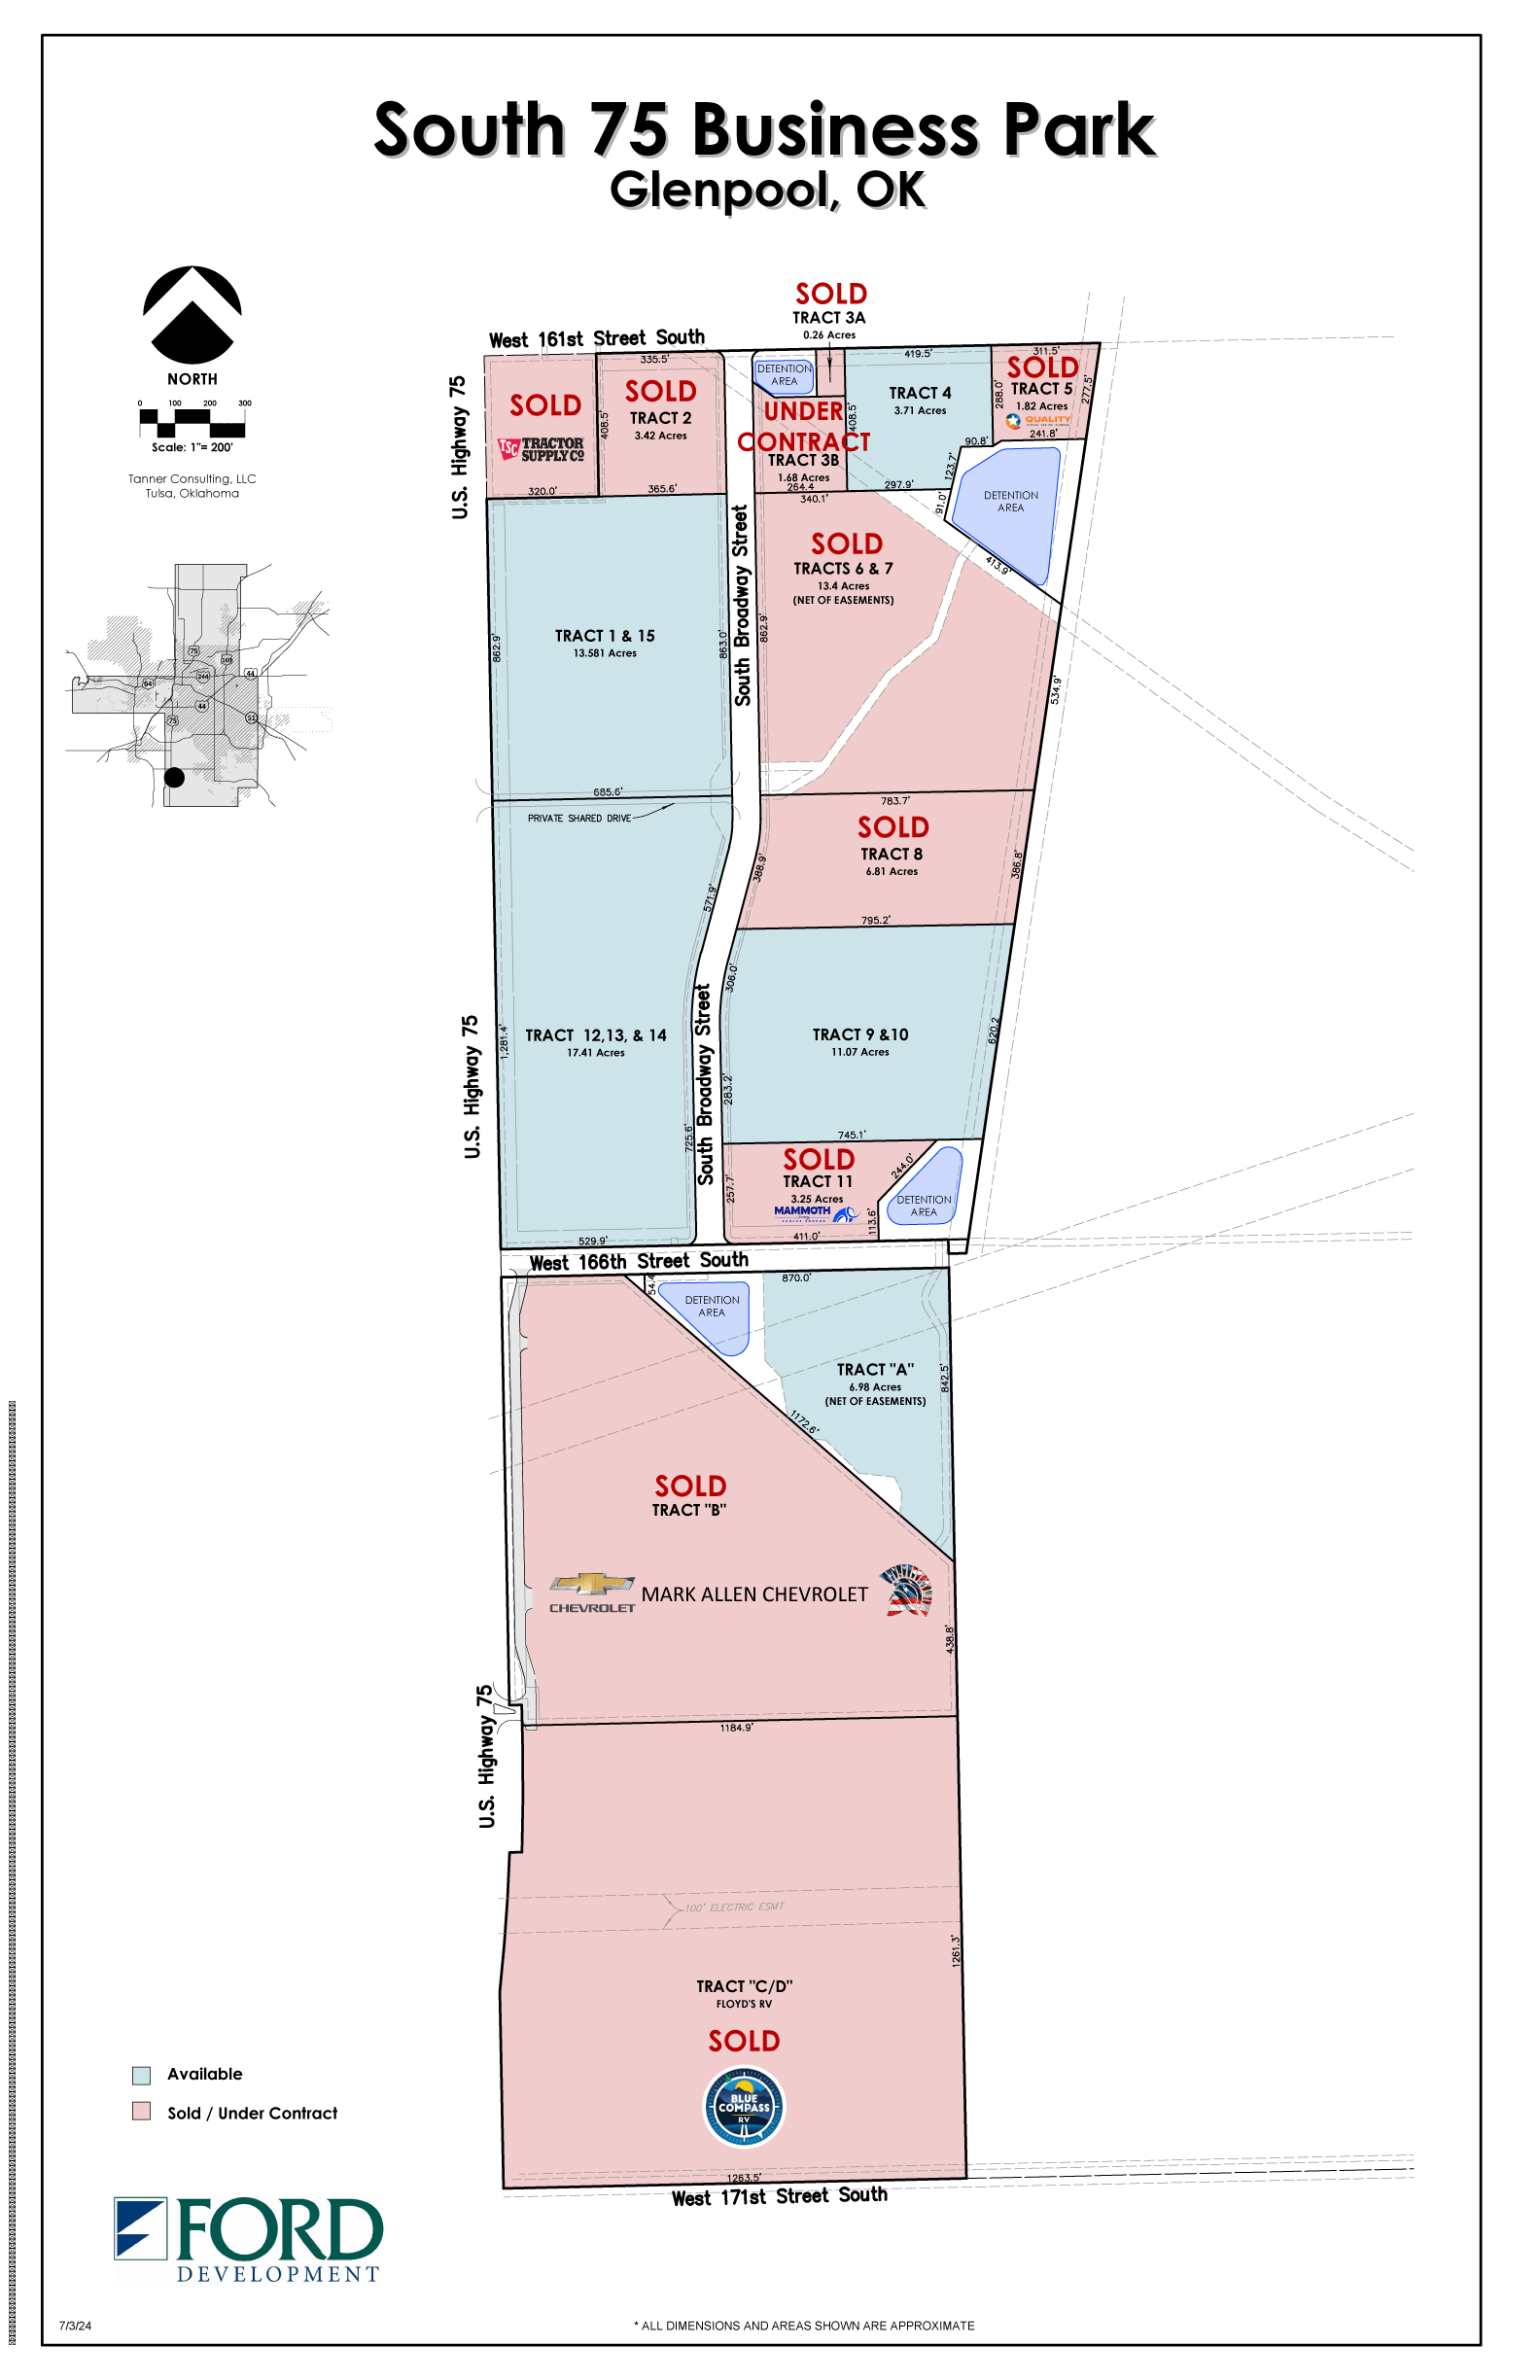 South 75 Business Park - Land Plan